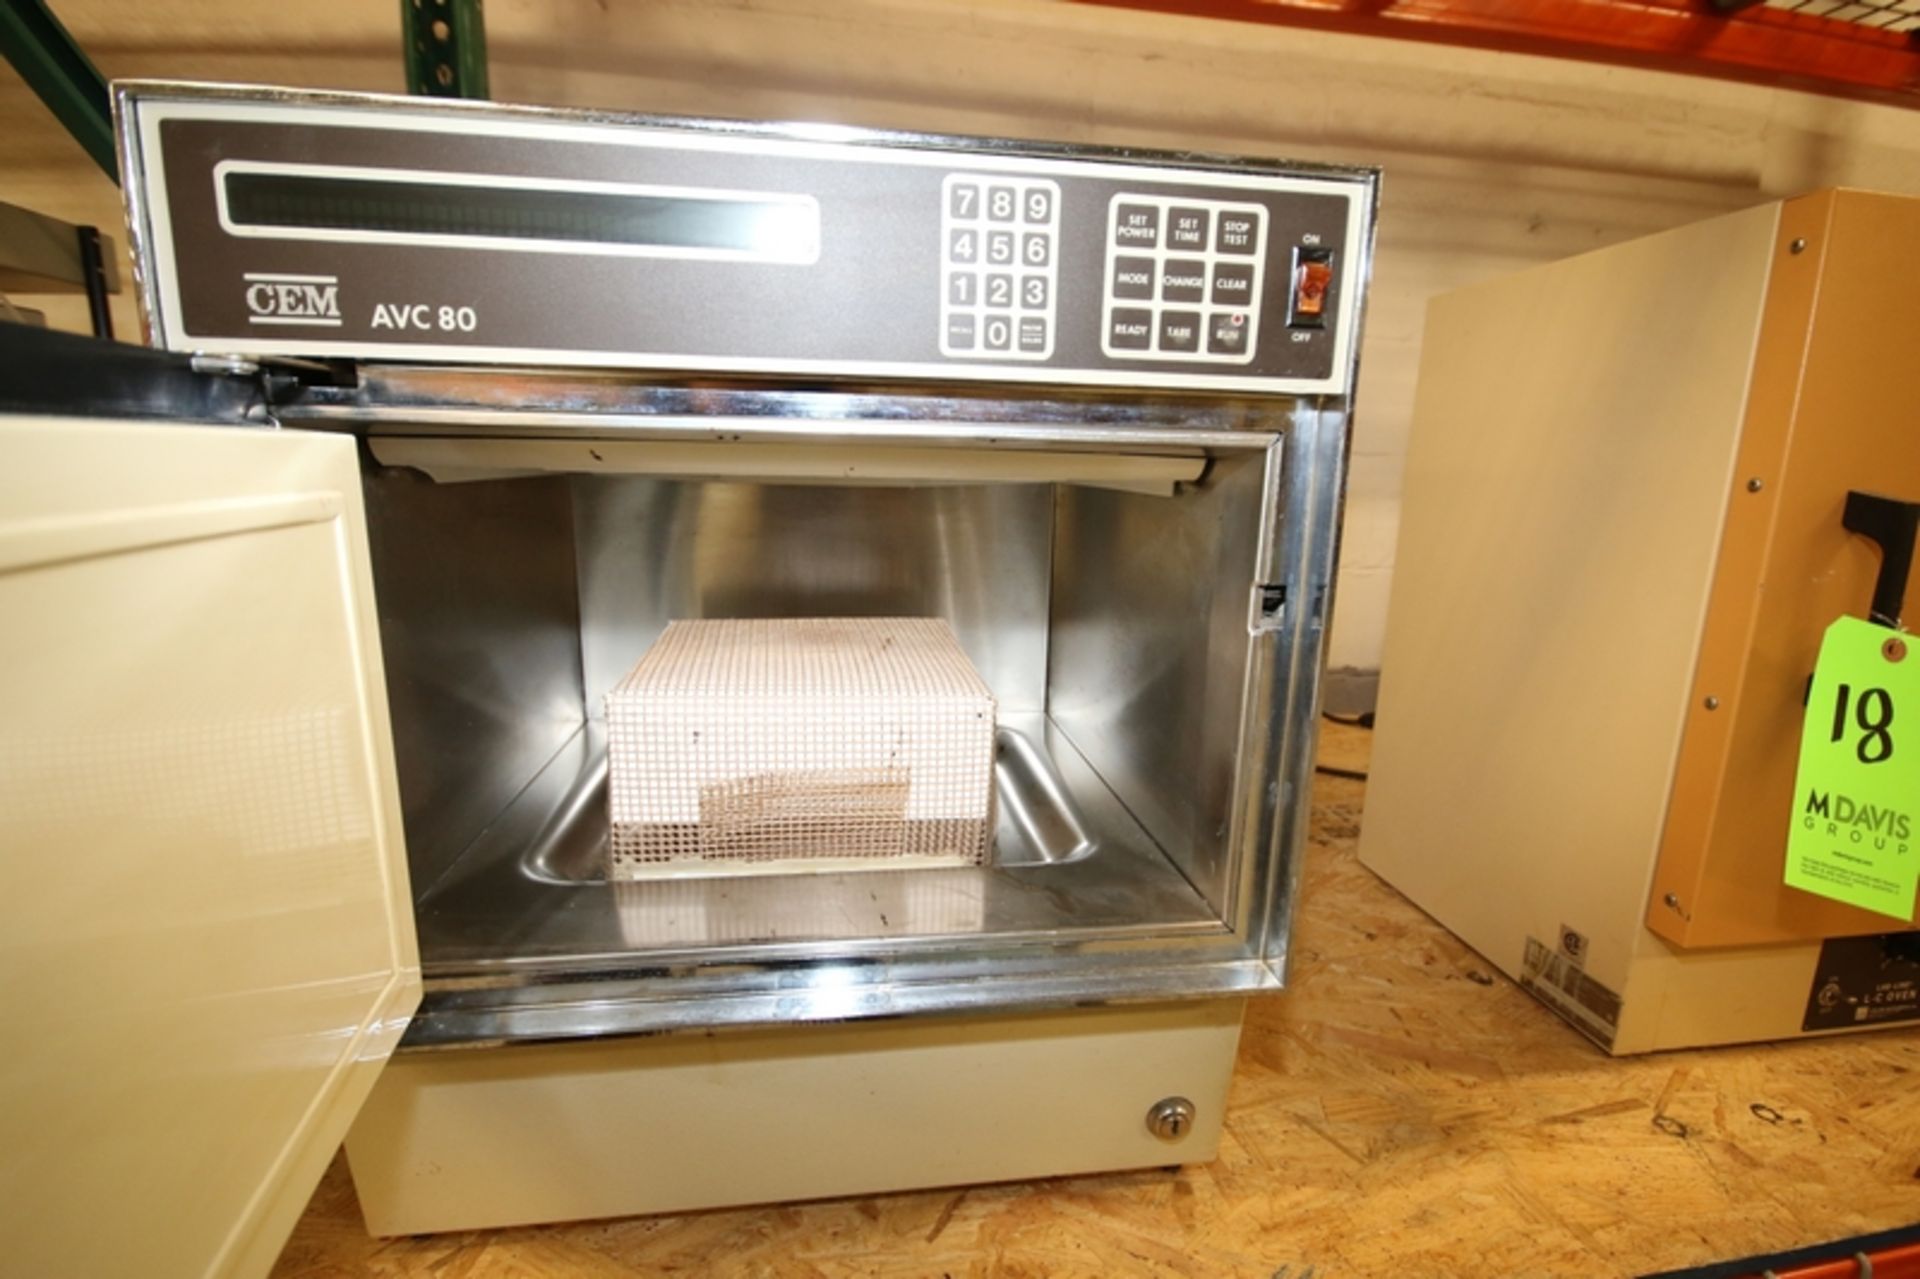 CEM Lab Microwave, Model AVC 80, S/N 3251 - Image 2 of 2